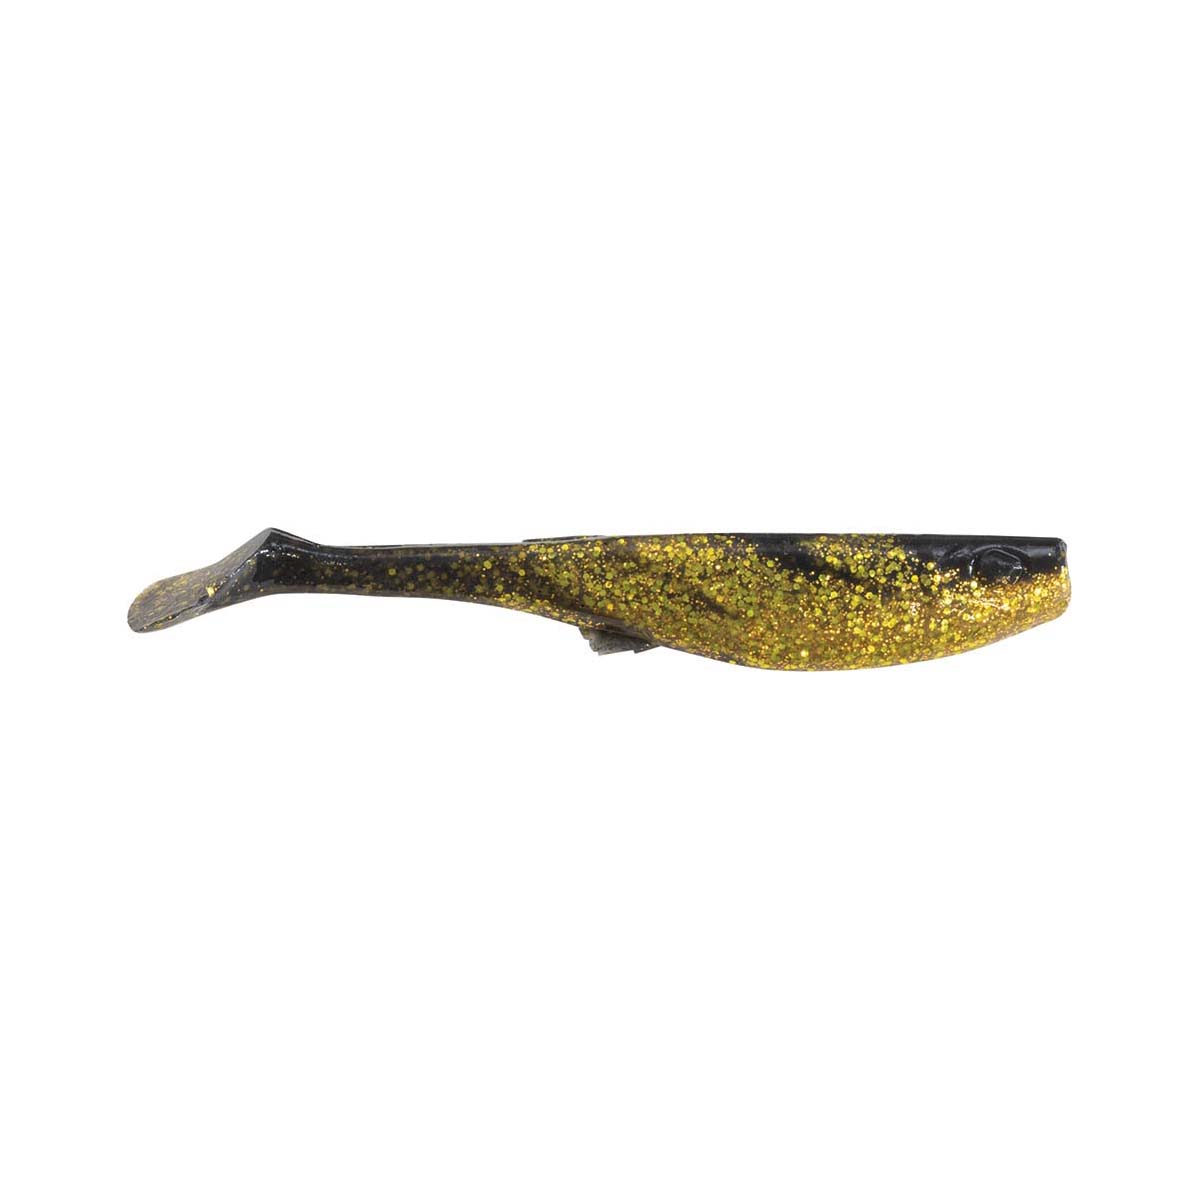 Berkley Gulp! Paddletail Shad Soft Plastic Lure 6in Black / Gold